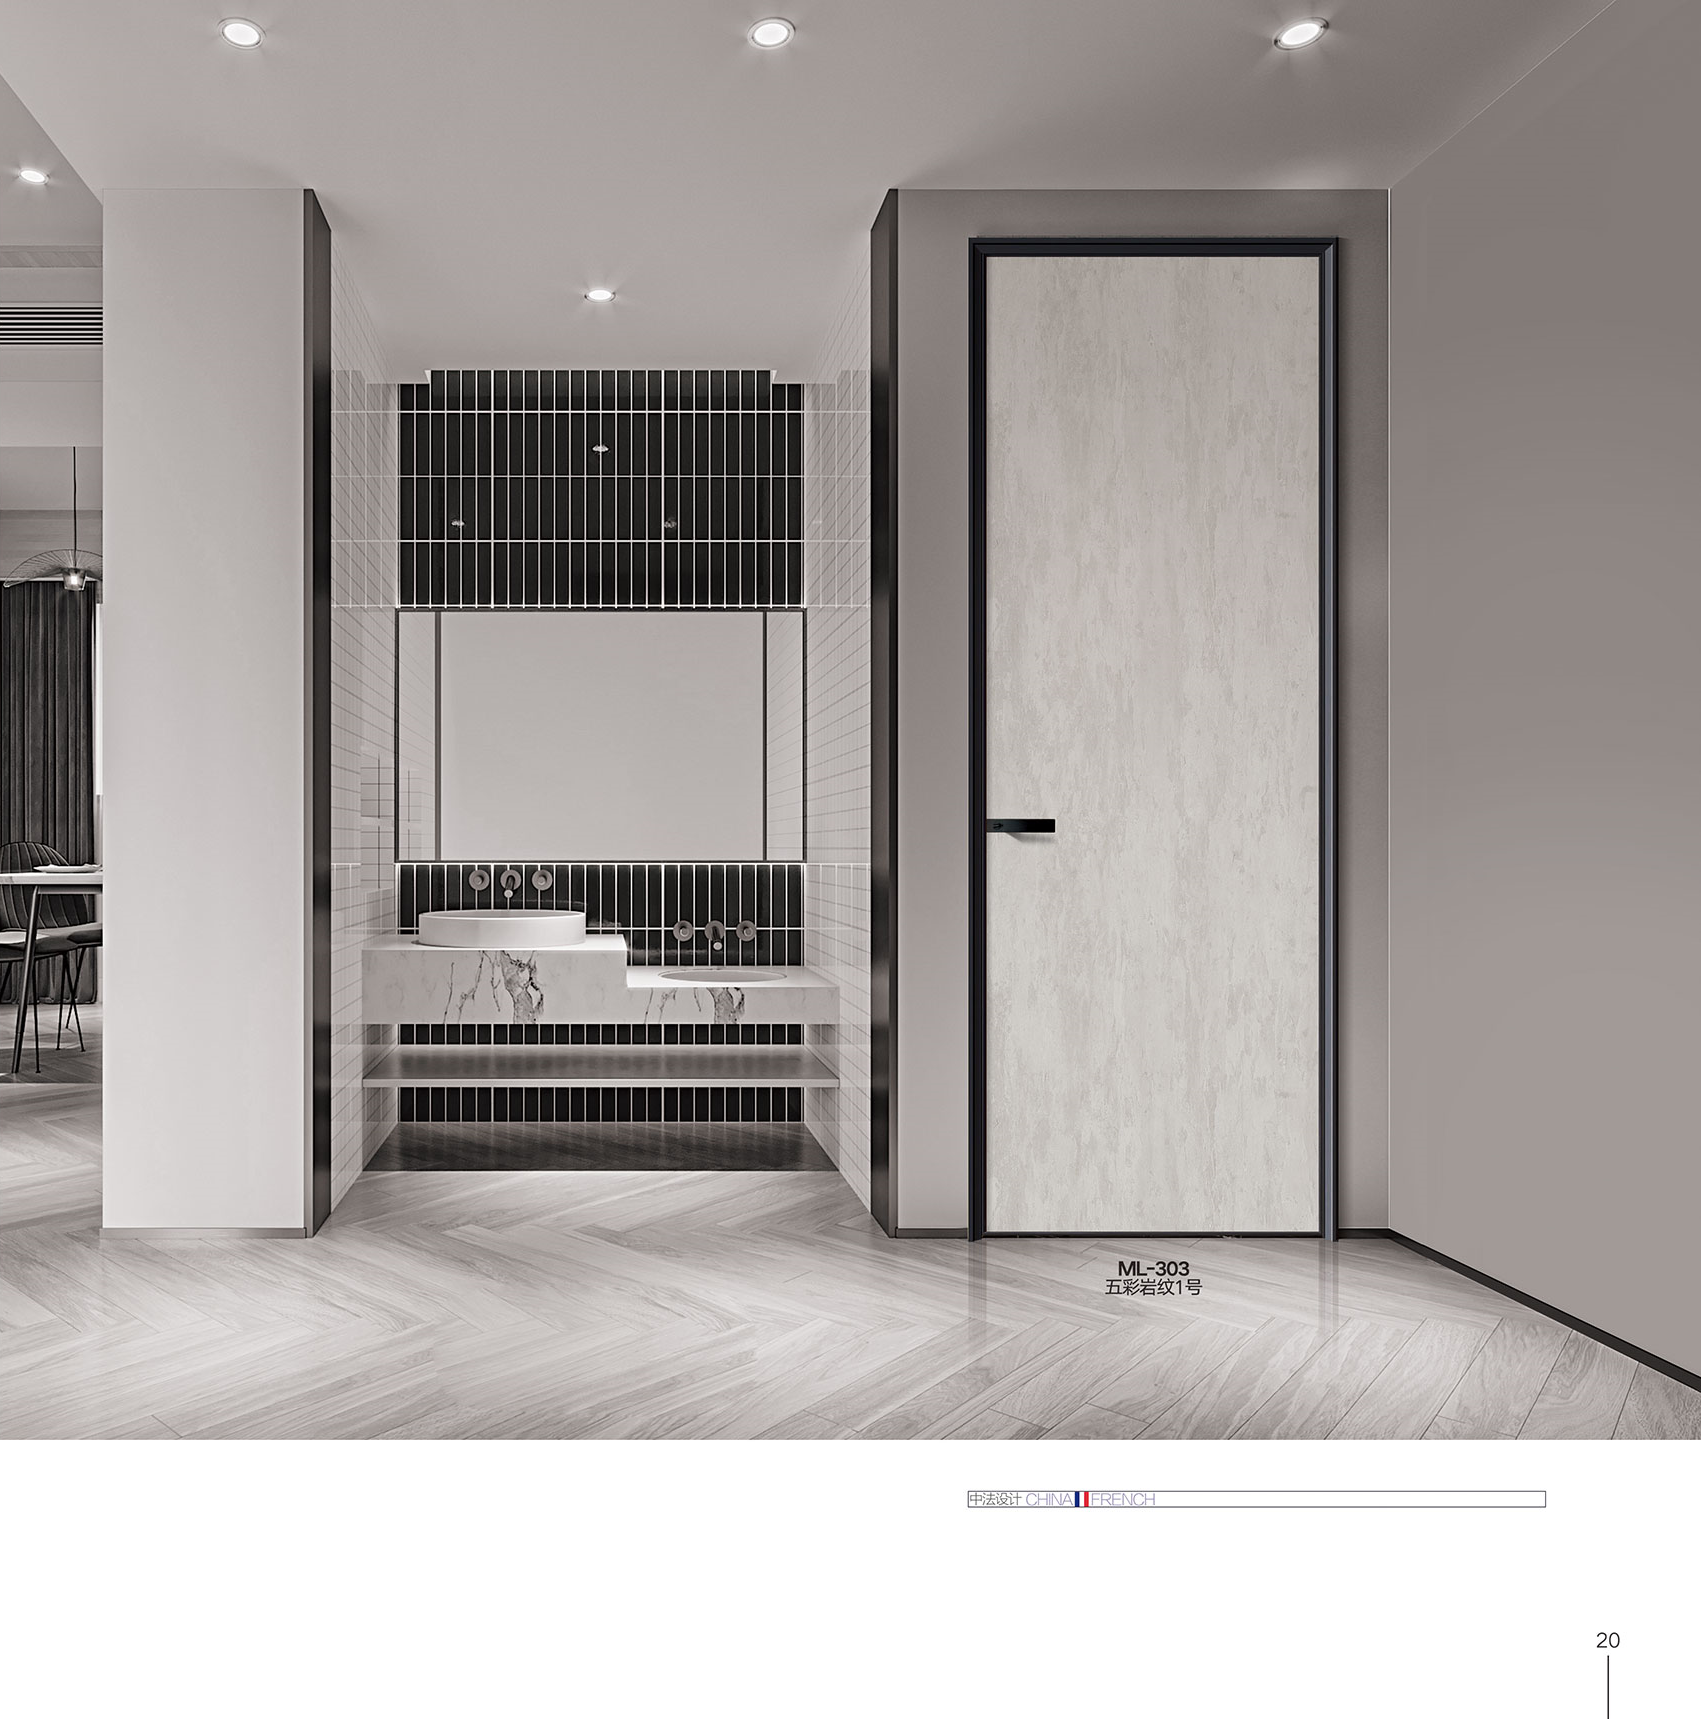 Popular Hot Selling Interior Mdf Doors Modern Guaranteed Quality Mdf Doors